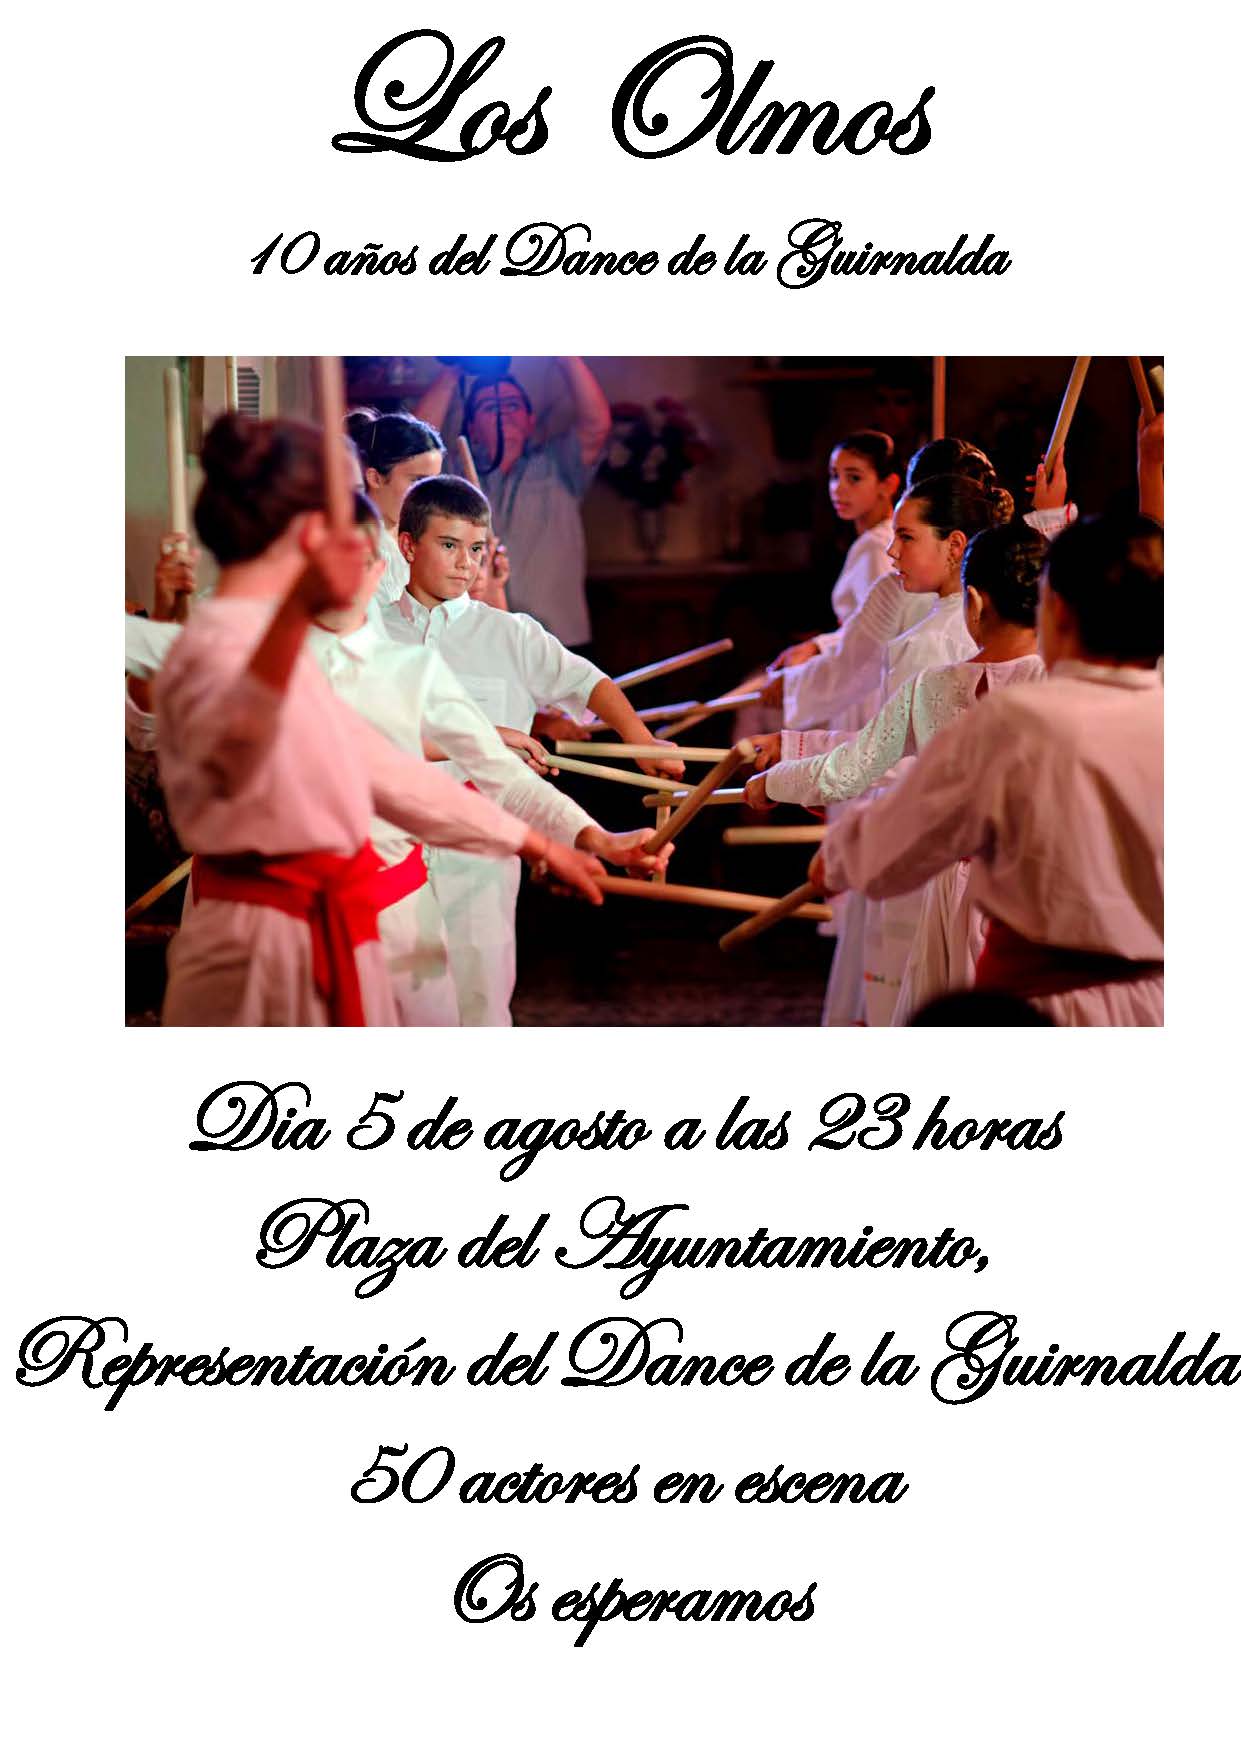 Los Olmos dance